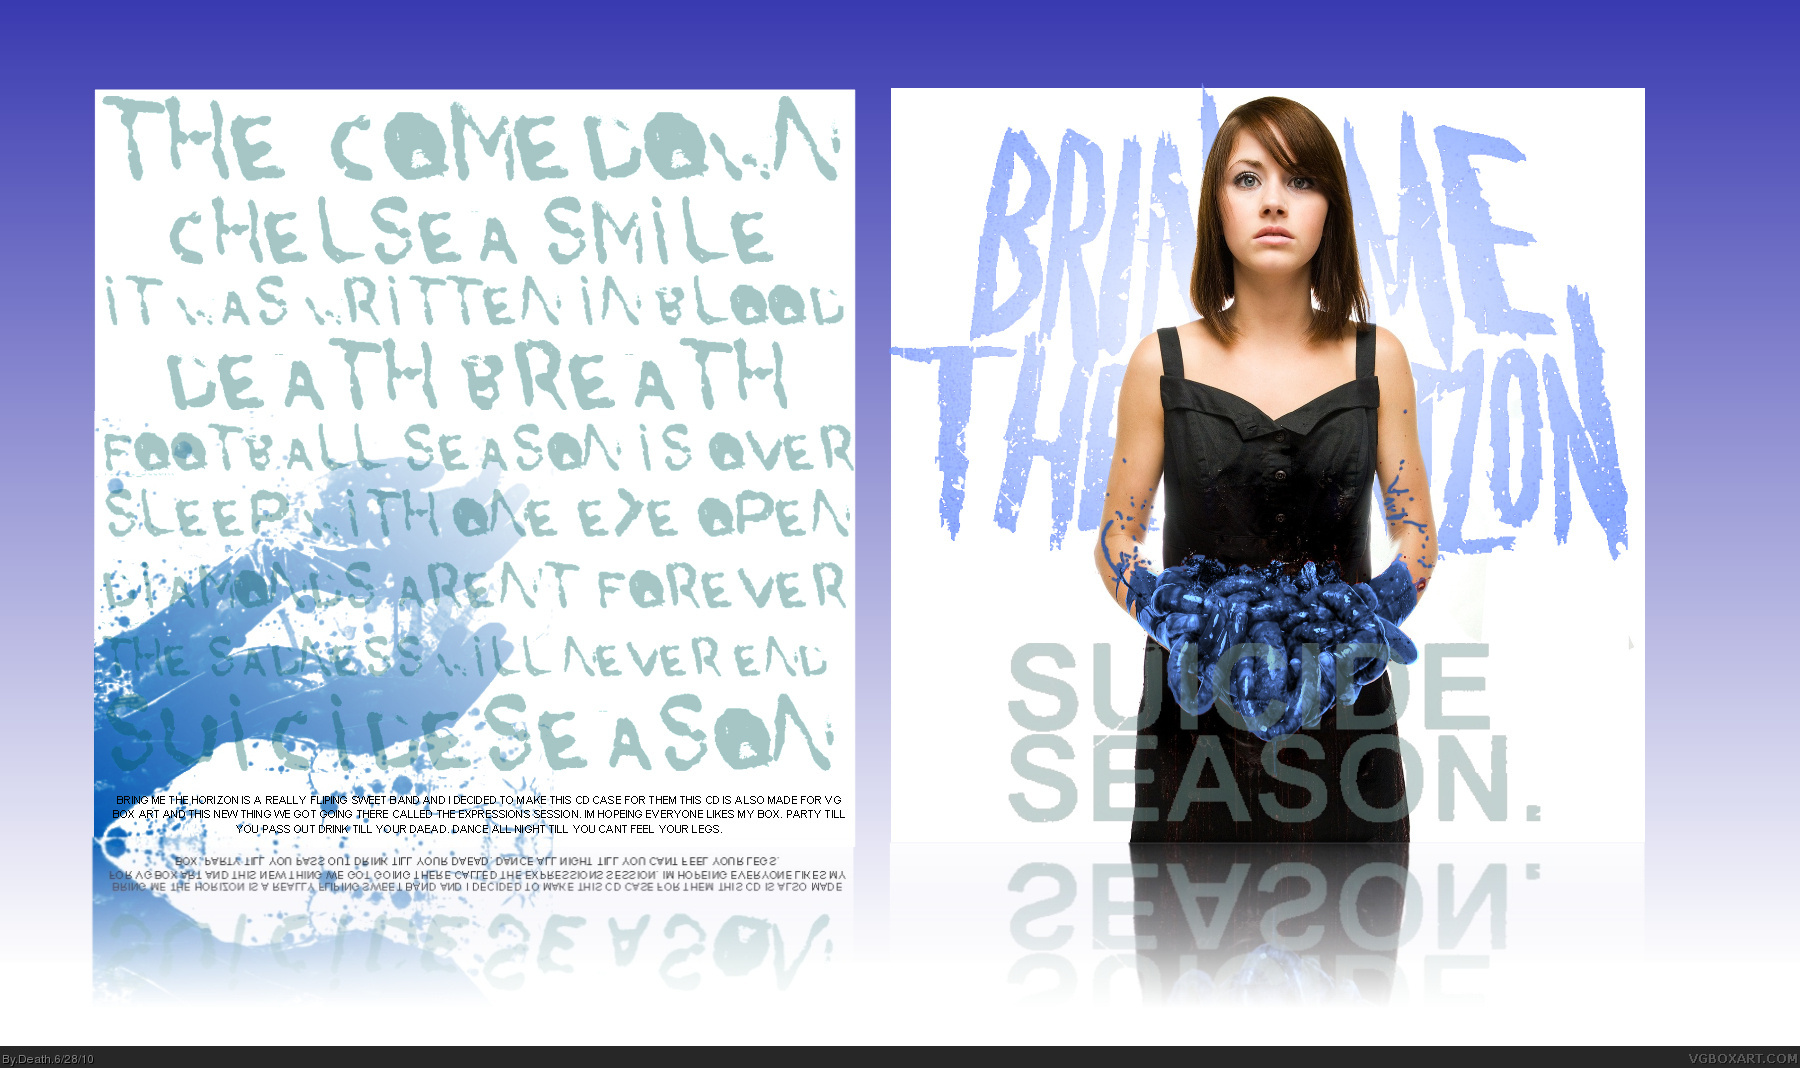 Bring Me The Horizon : Suicide Season box cover